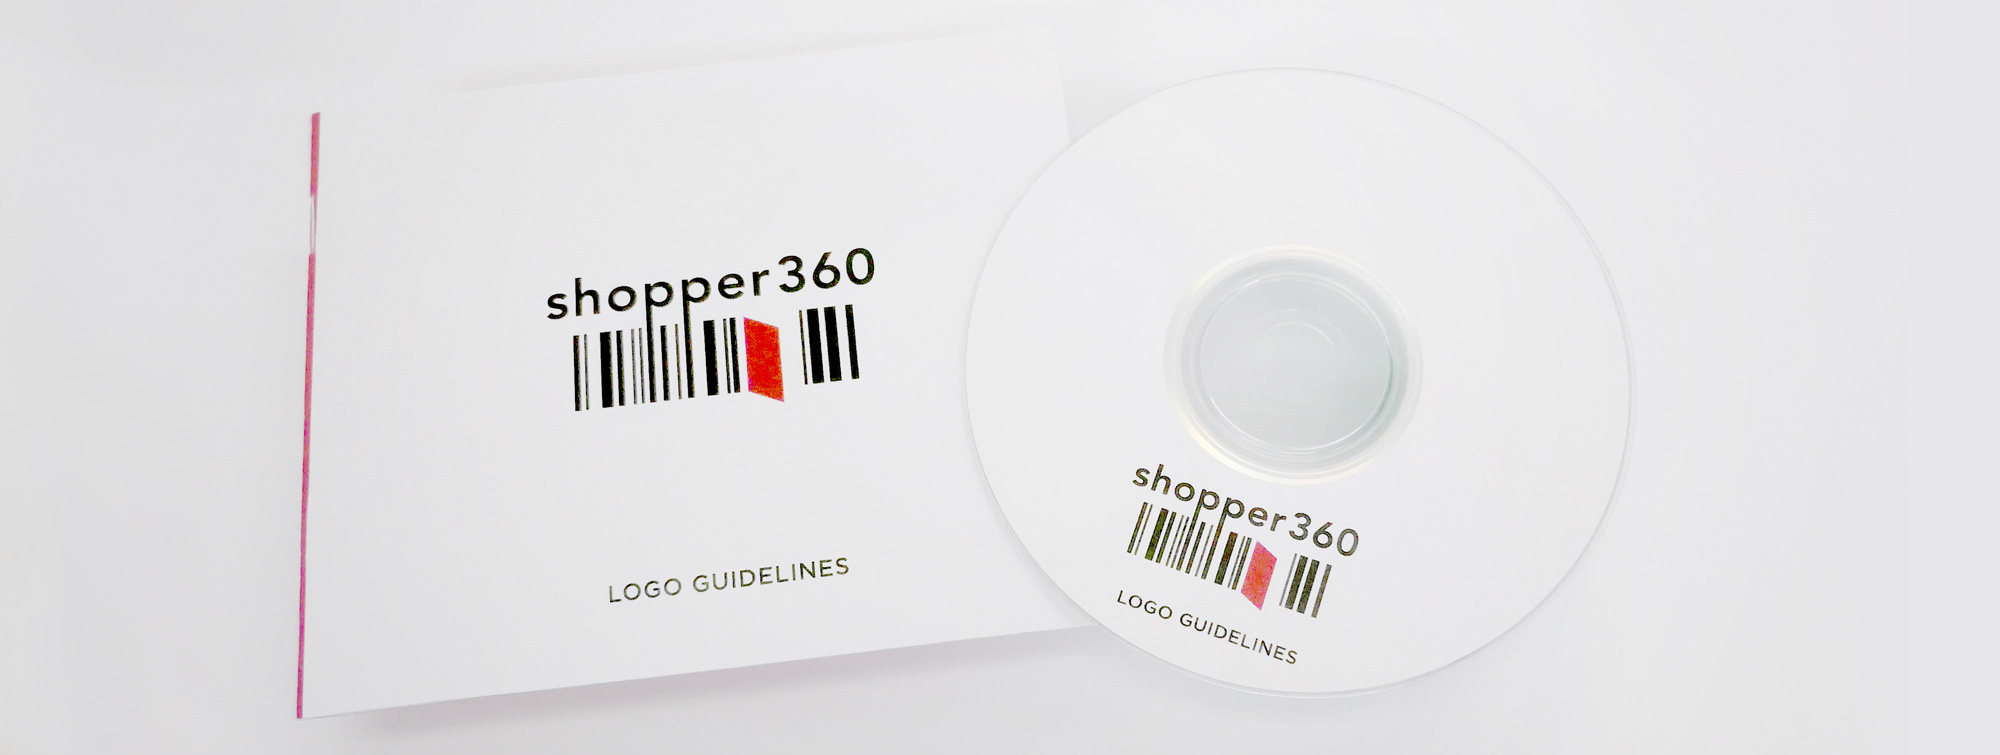 shopper360